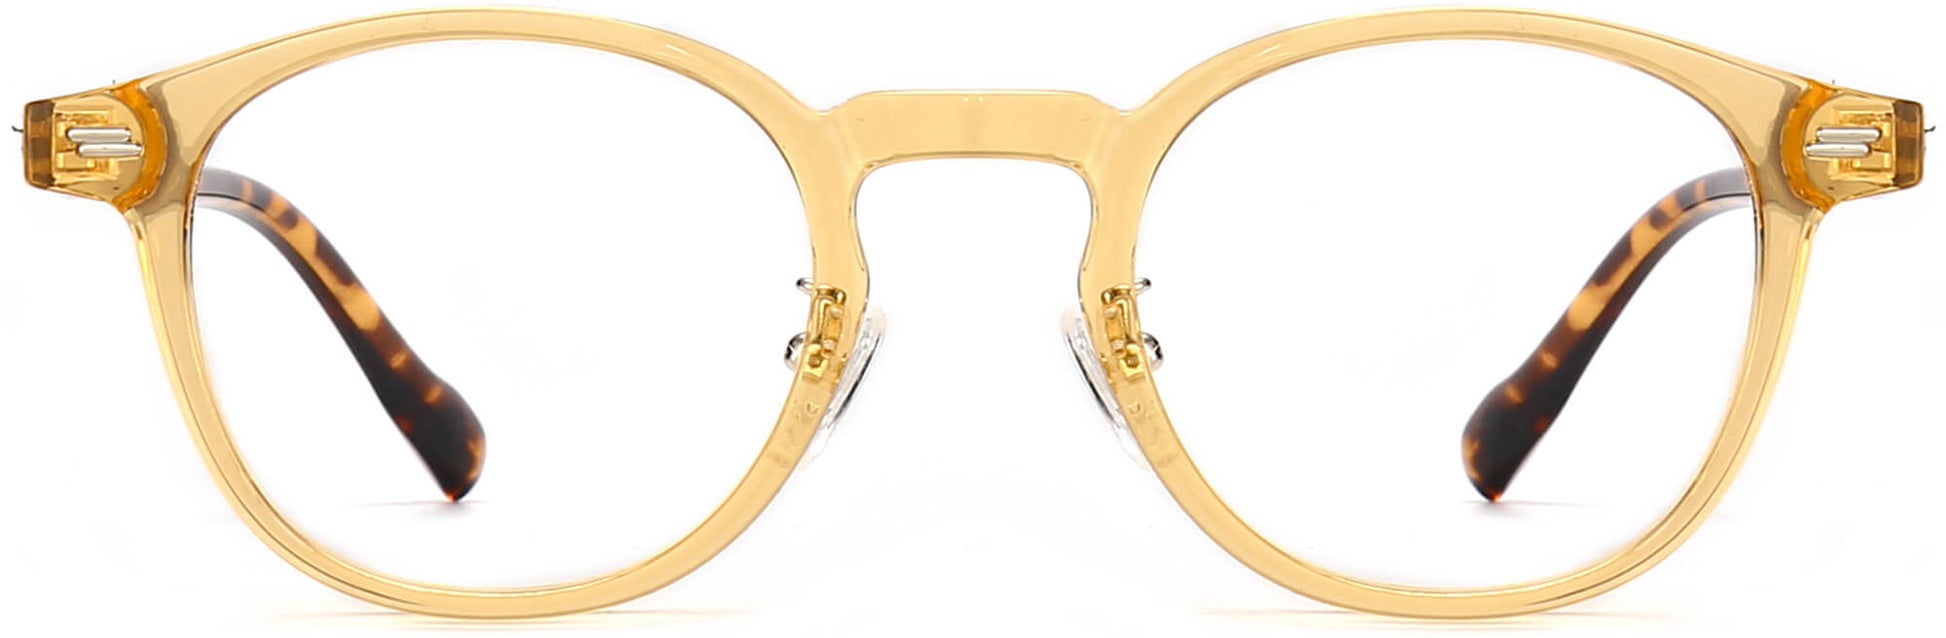 Ruben Round Yellow Eyeglasses from ANRRI, front view